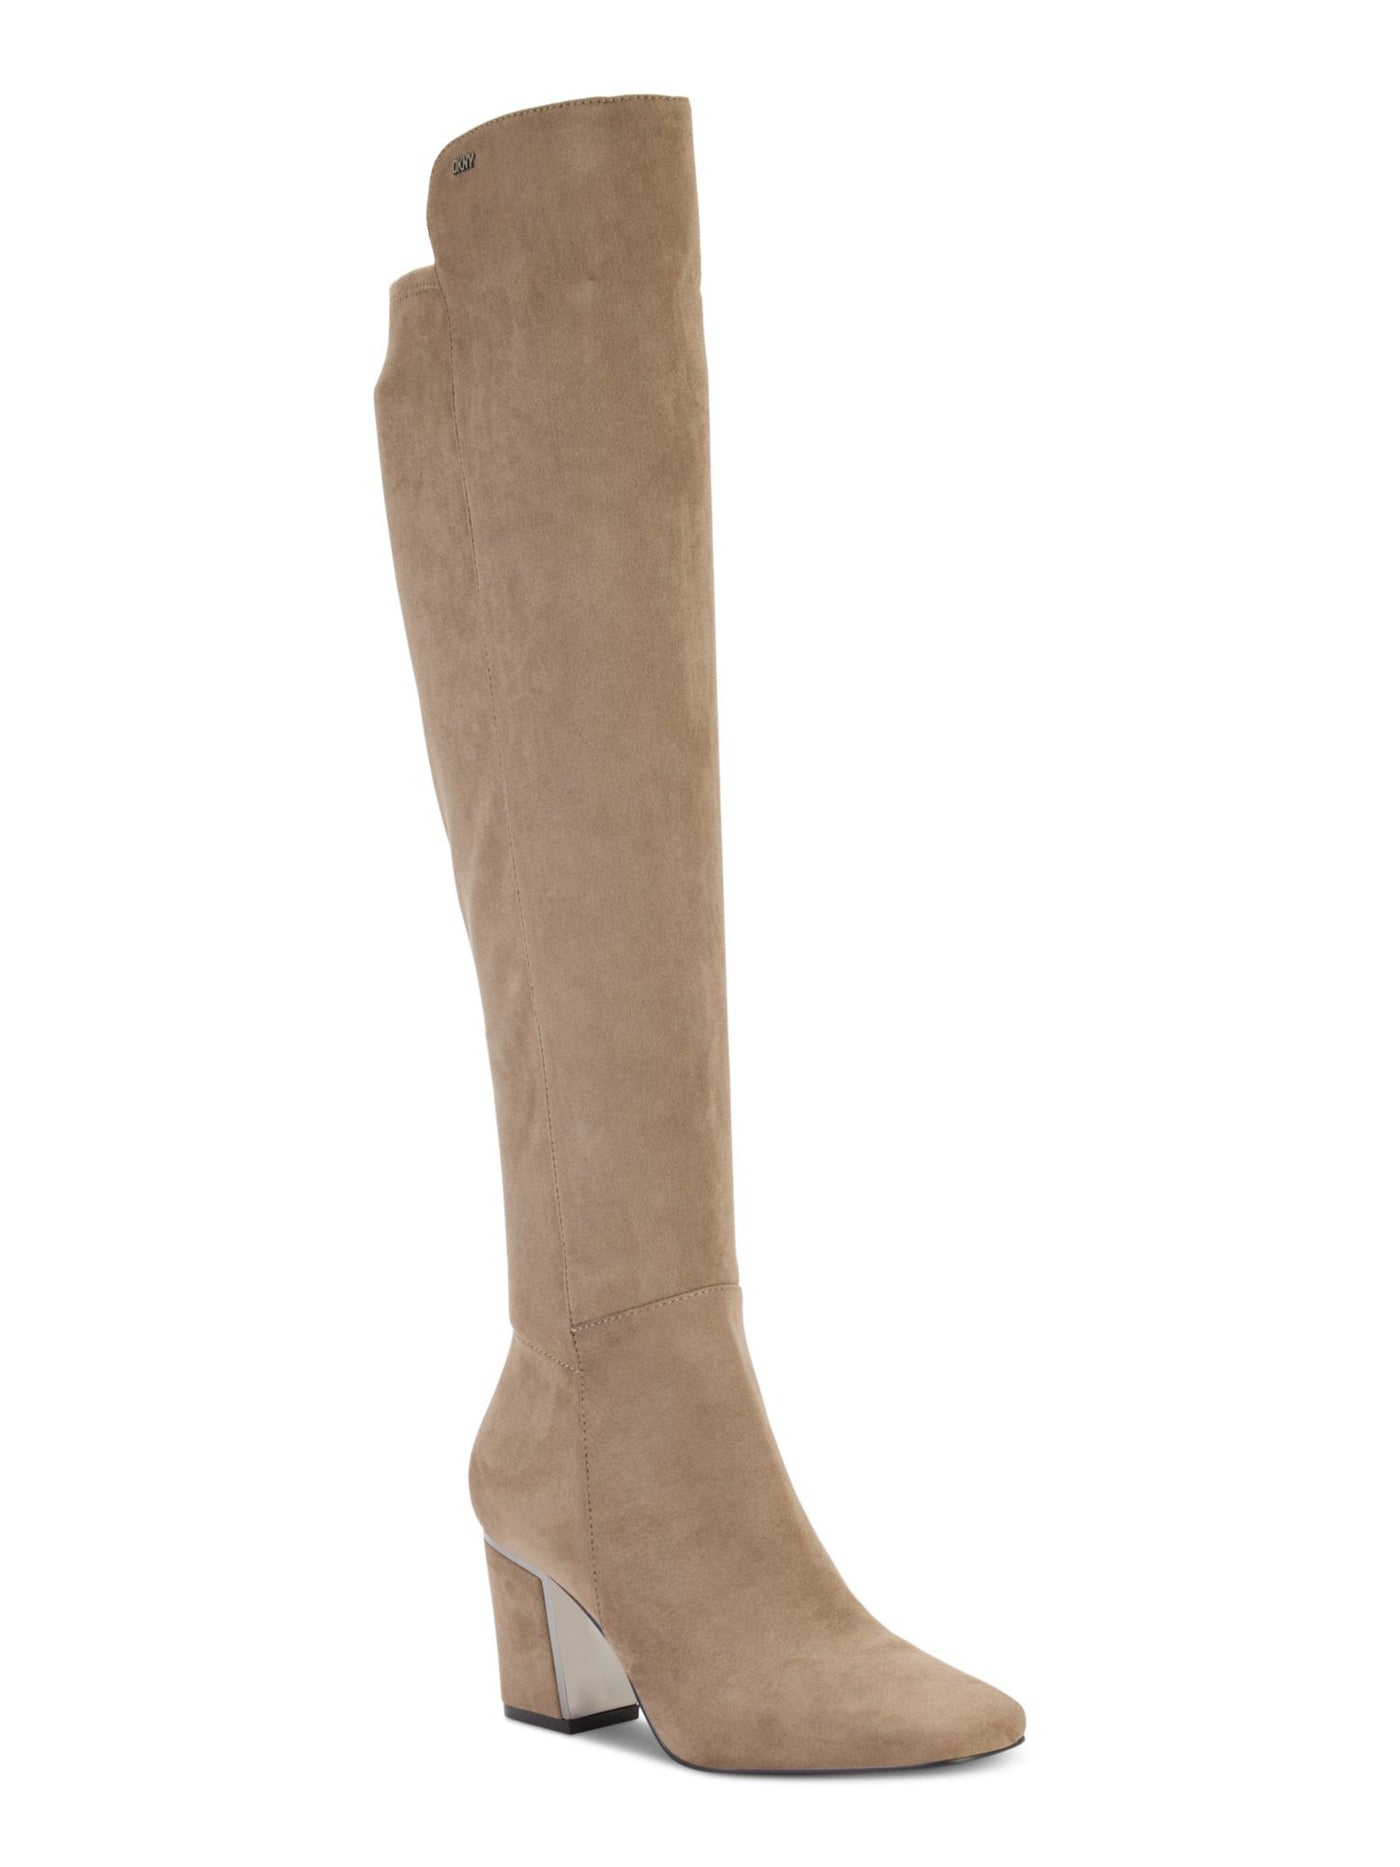 DKNY Womens Beige Cilli Square Toe Block Heel Zip-Up Heeled Boots 8 M